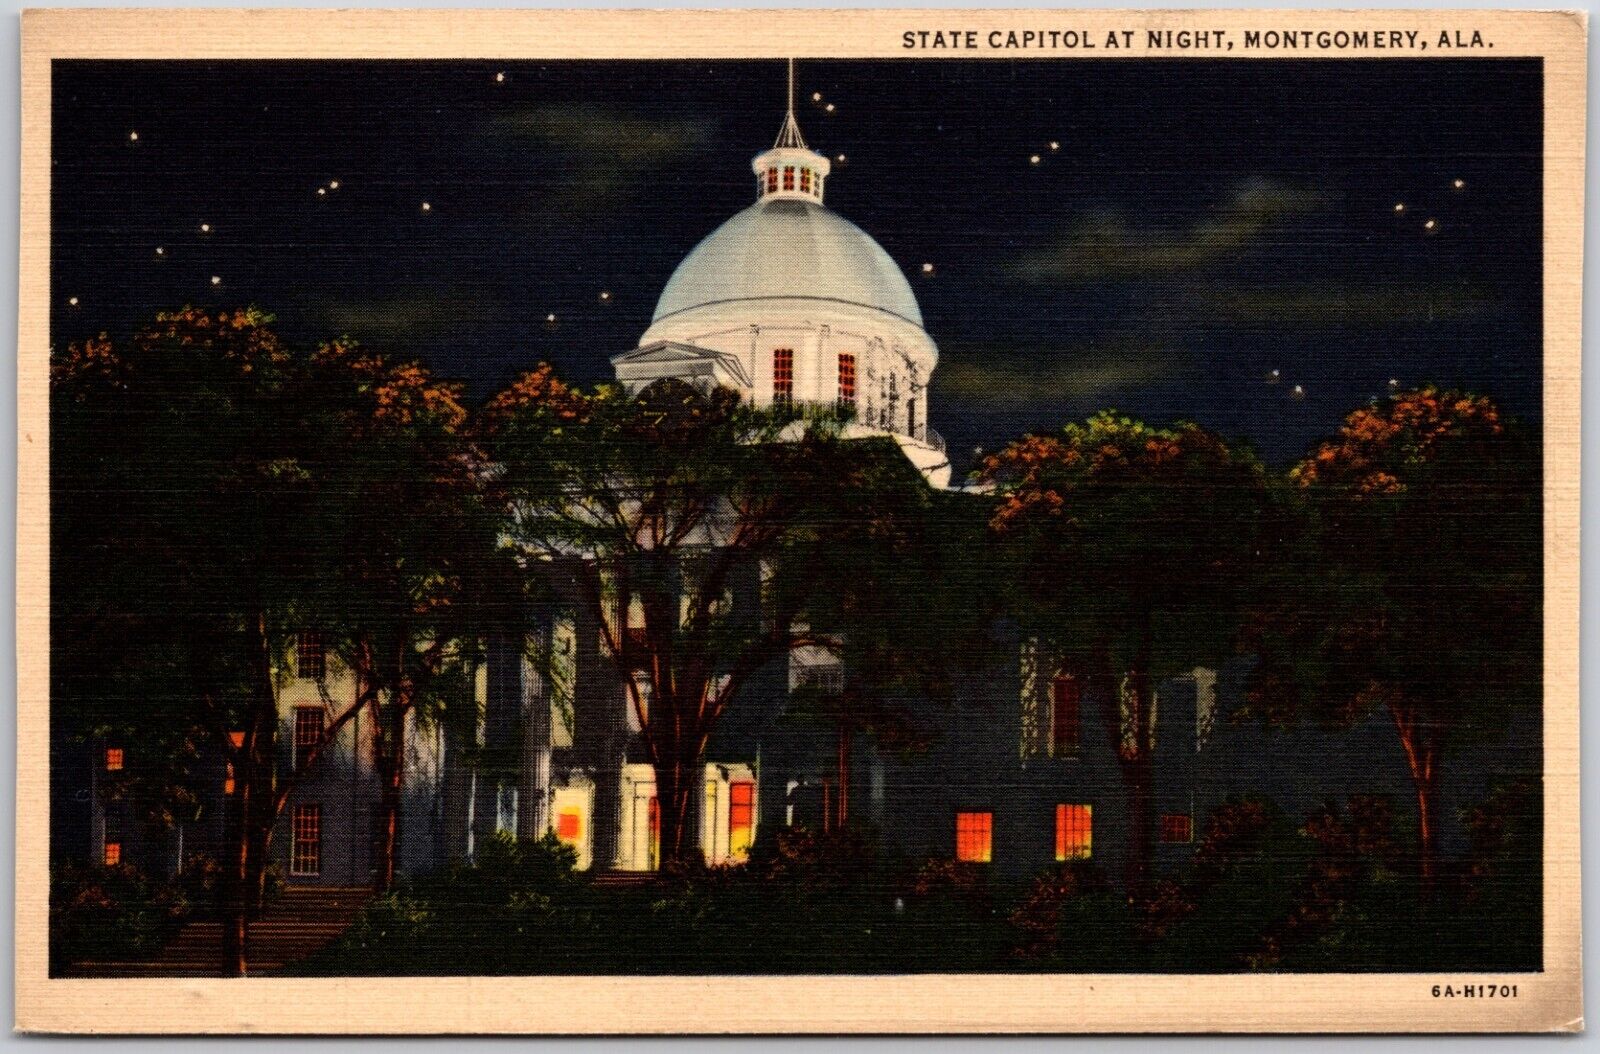 Montgomery Alabama State Capitol Building Illuminated At Night 1930s